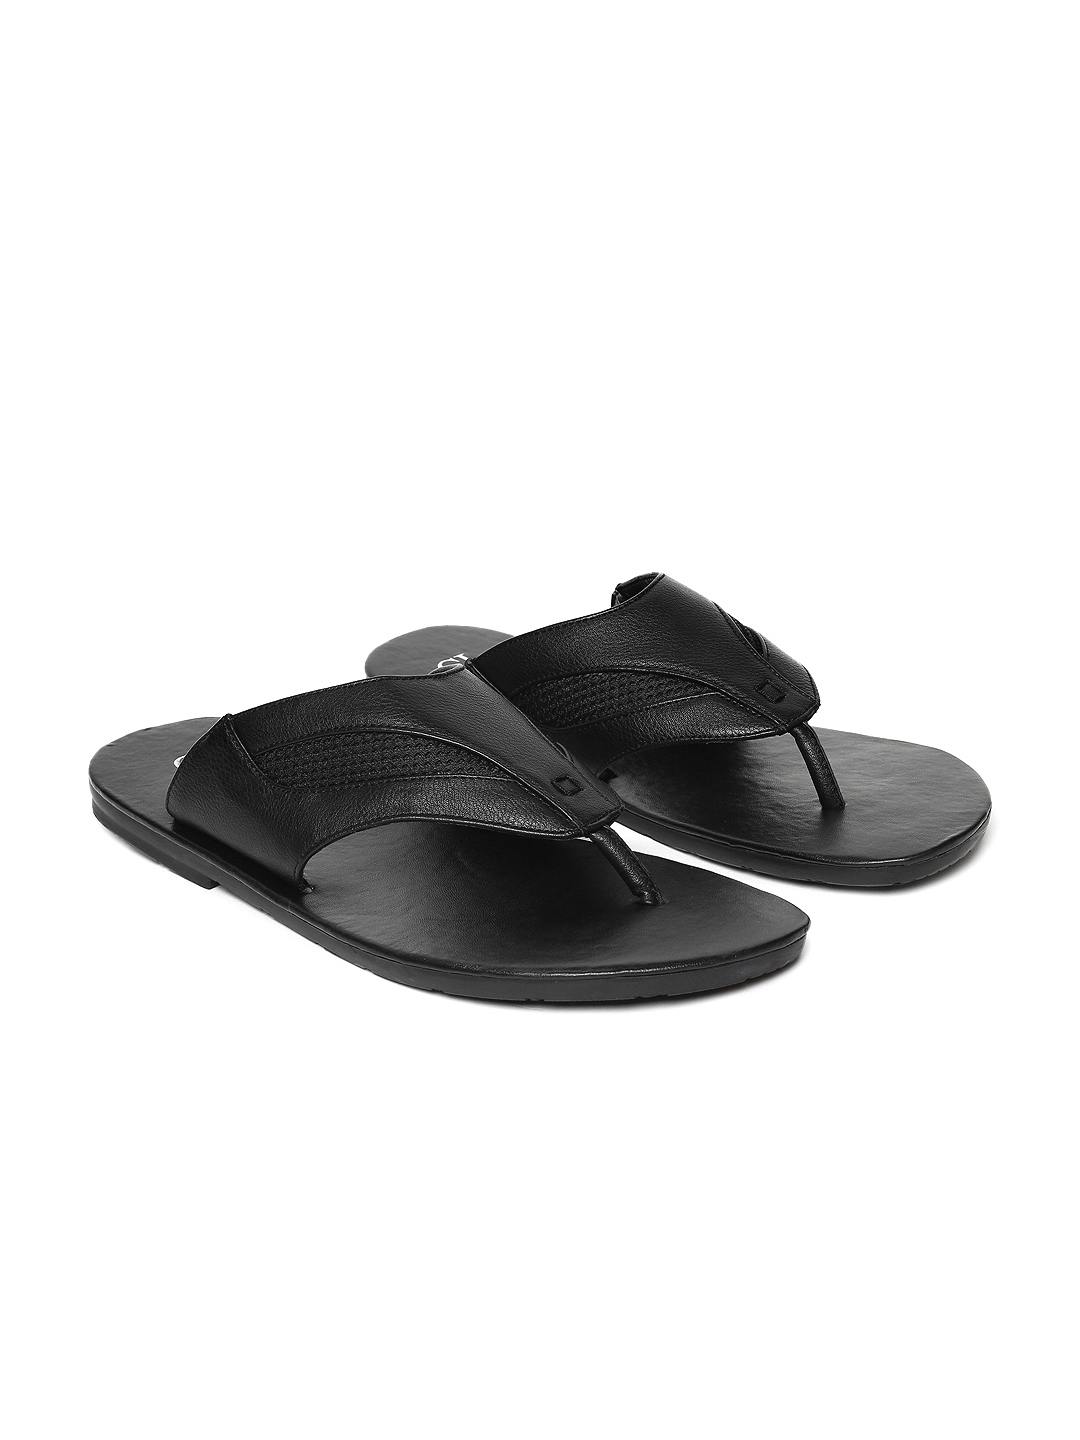 Buy Carlton London Men Black Sandals - Sandals for Men 8860247 | Myntra